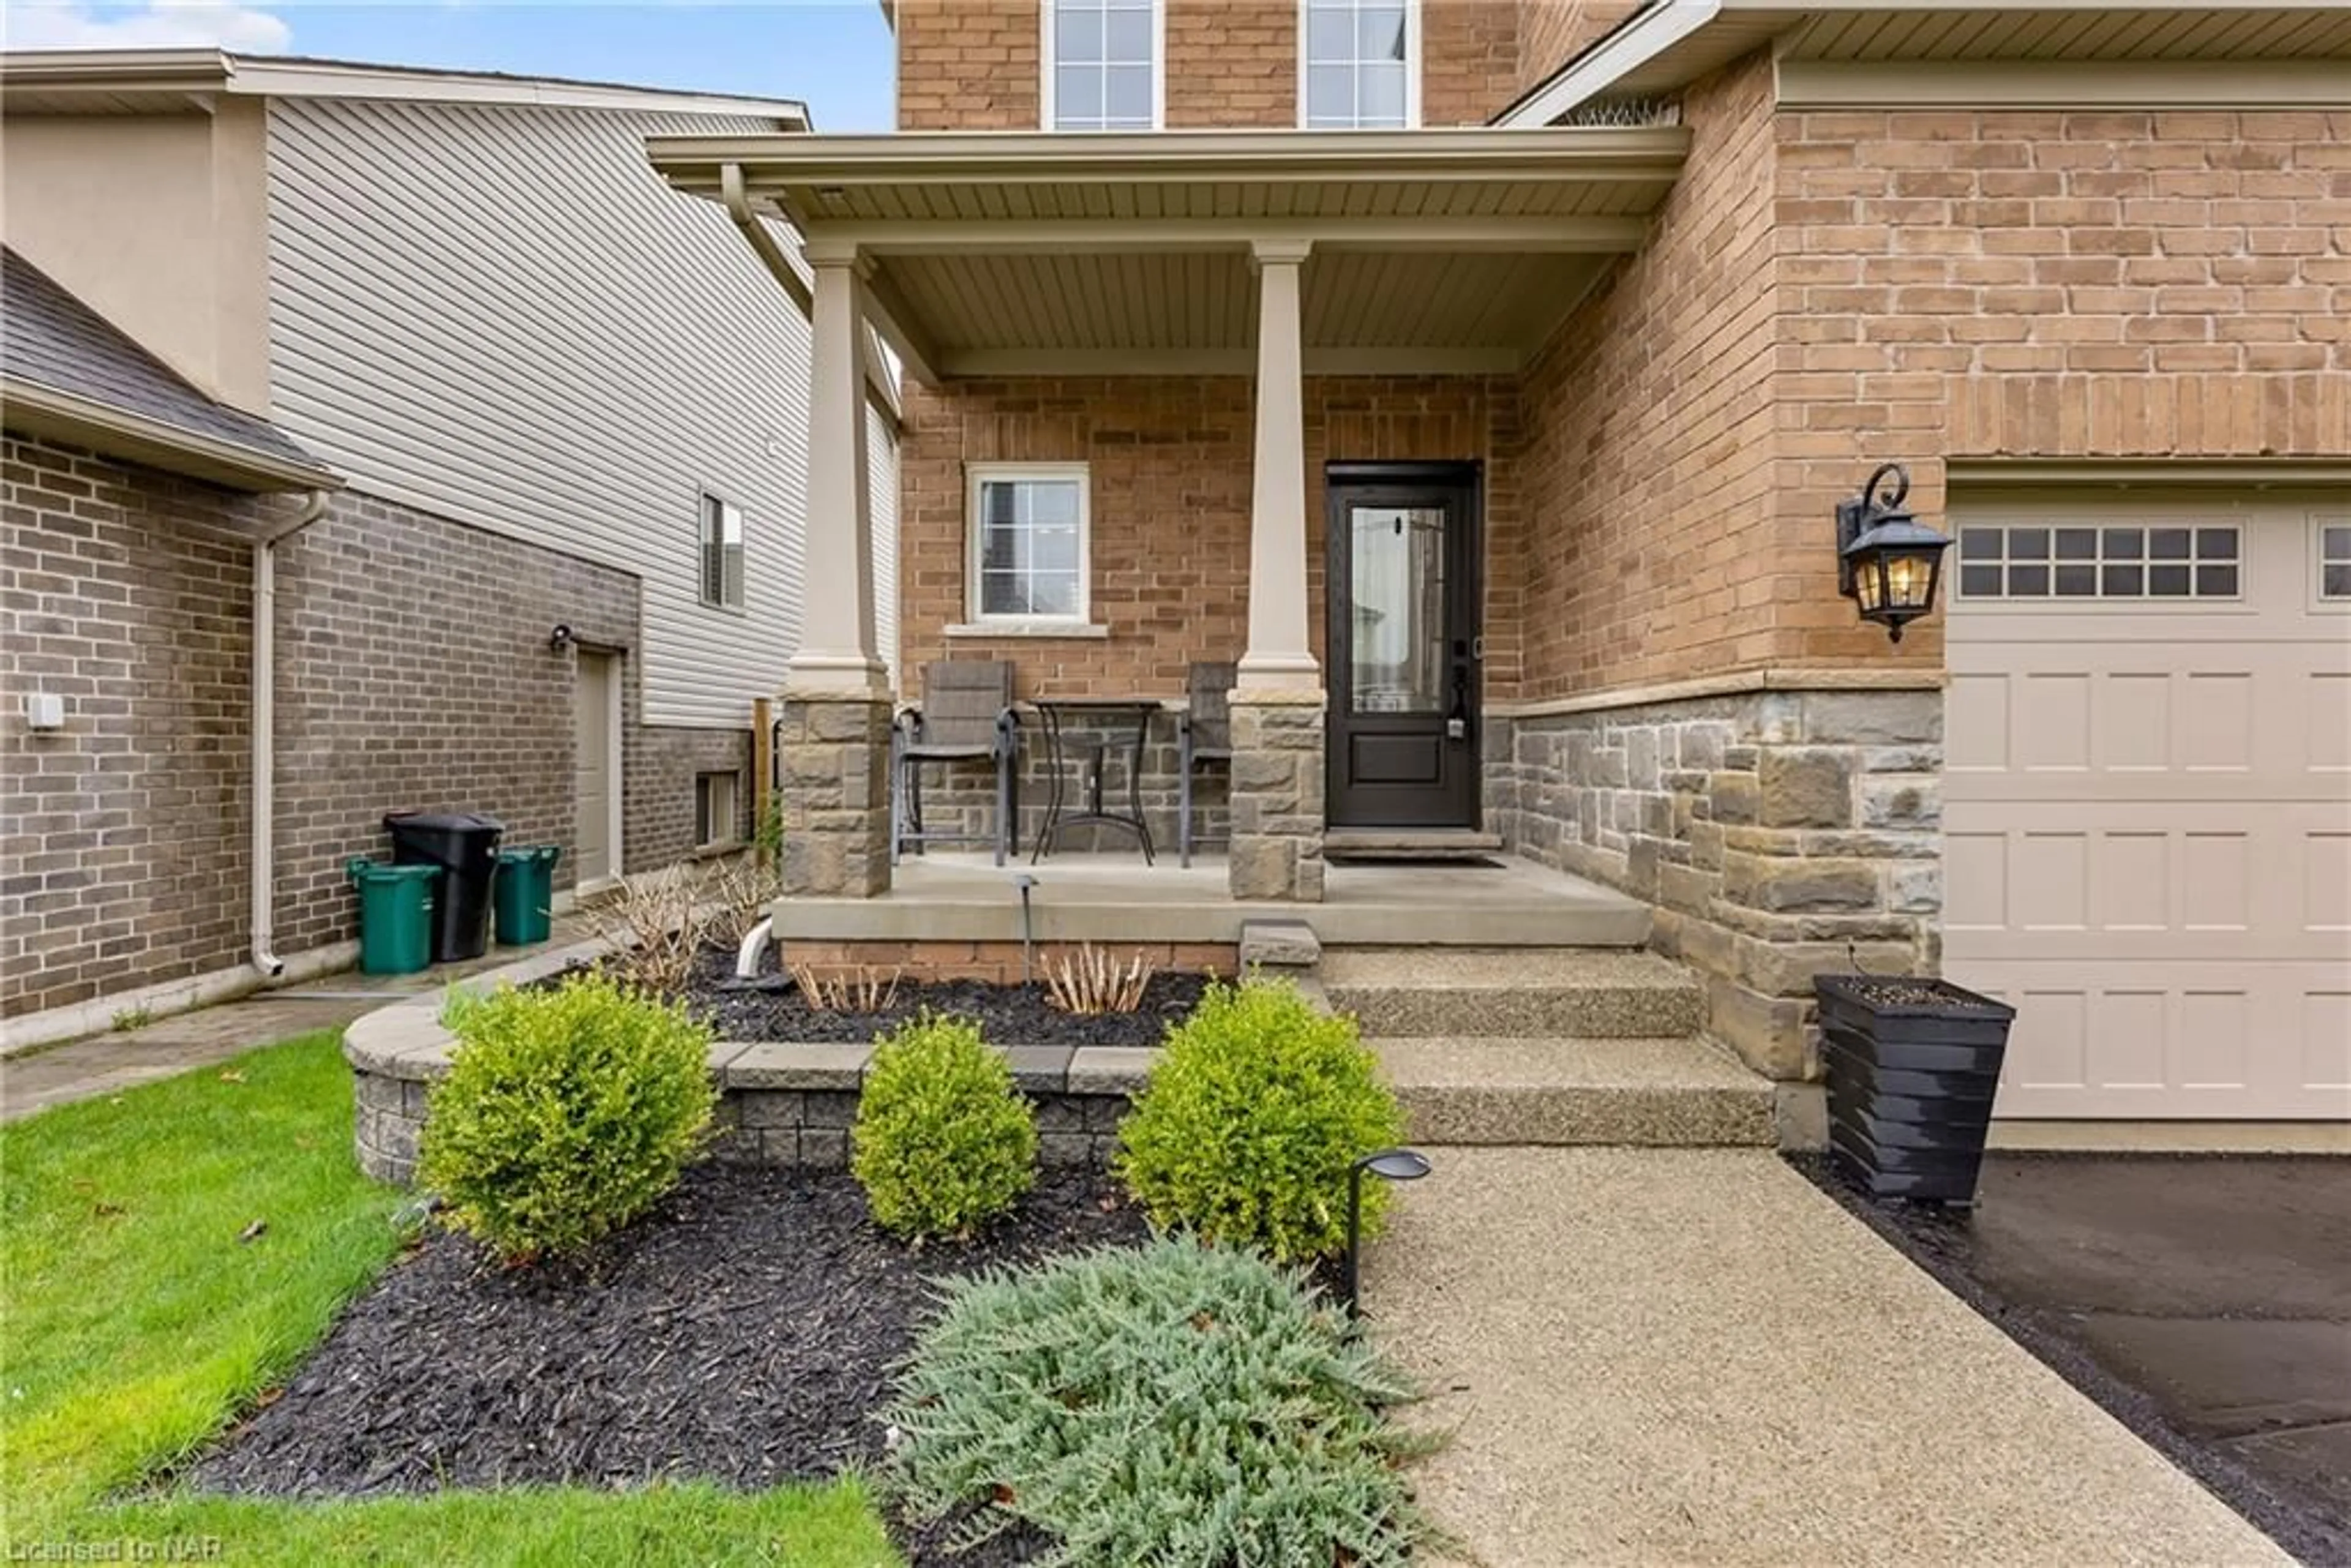 Home with brick exterior material for 5759 Jake Cres, Niagara Falls Ontario L2H 0G3